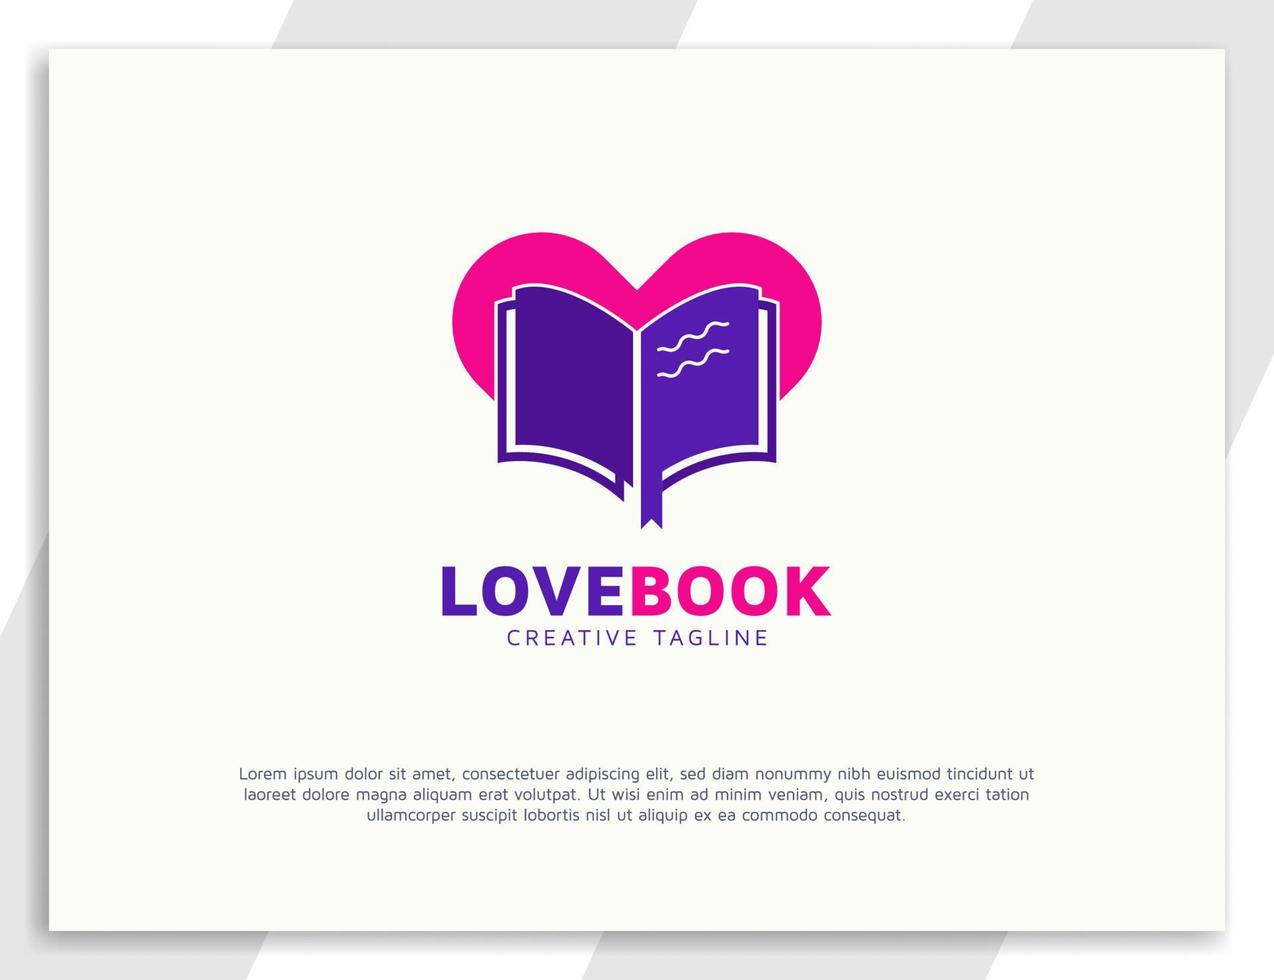 Book love logo with heart symbol design vector